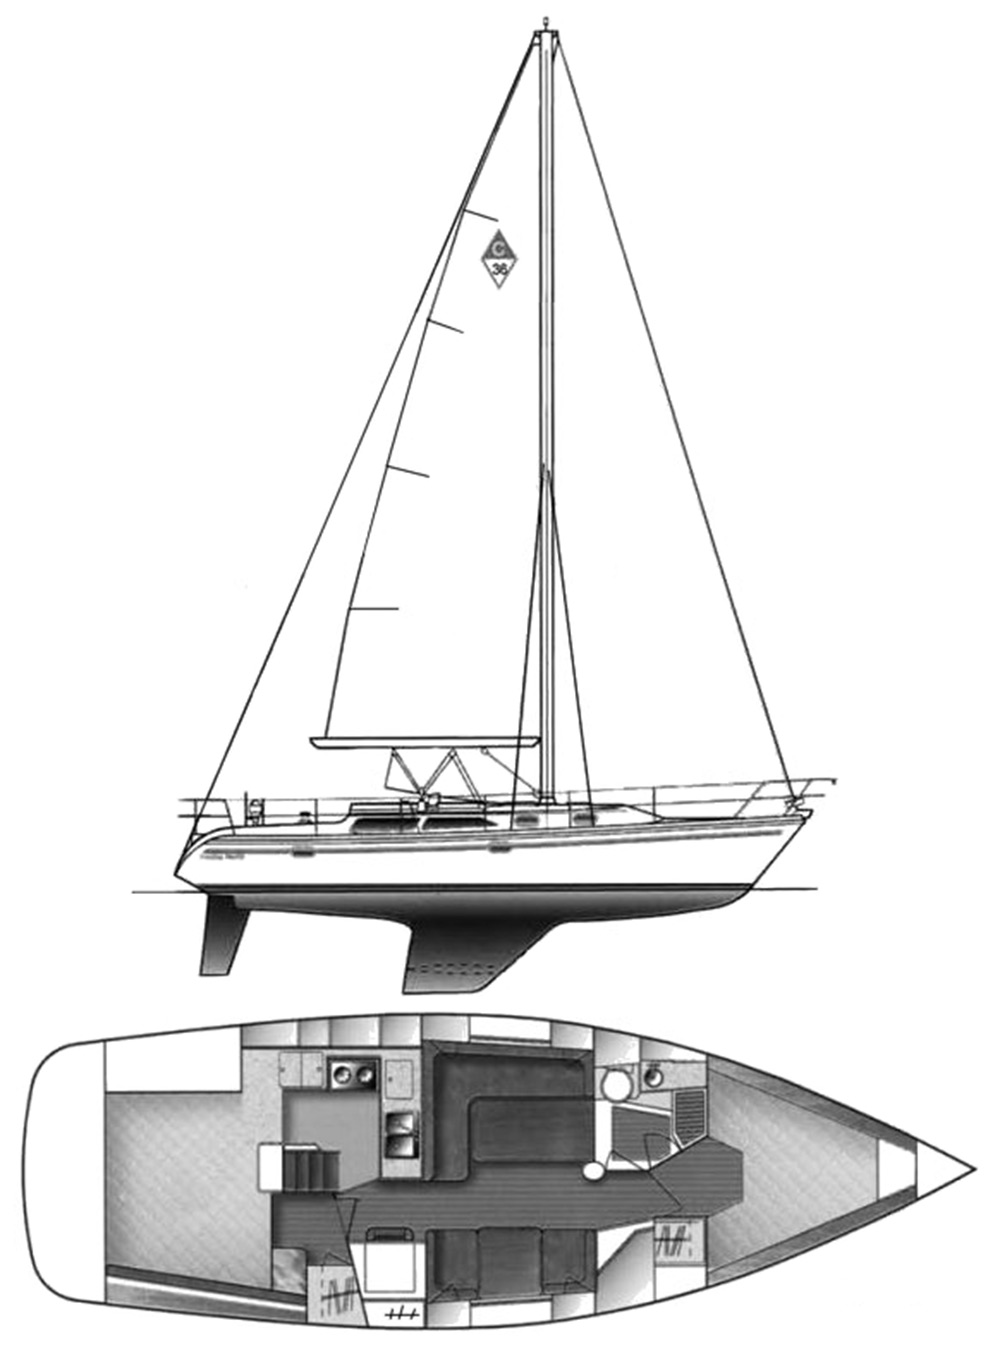 Retrofitting a Catalina 36 sailboat